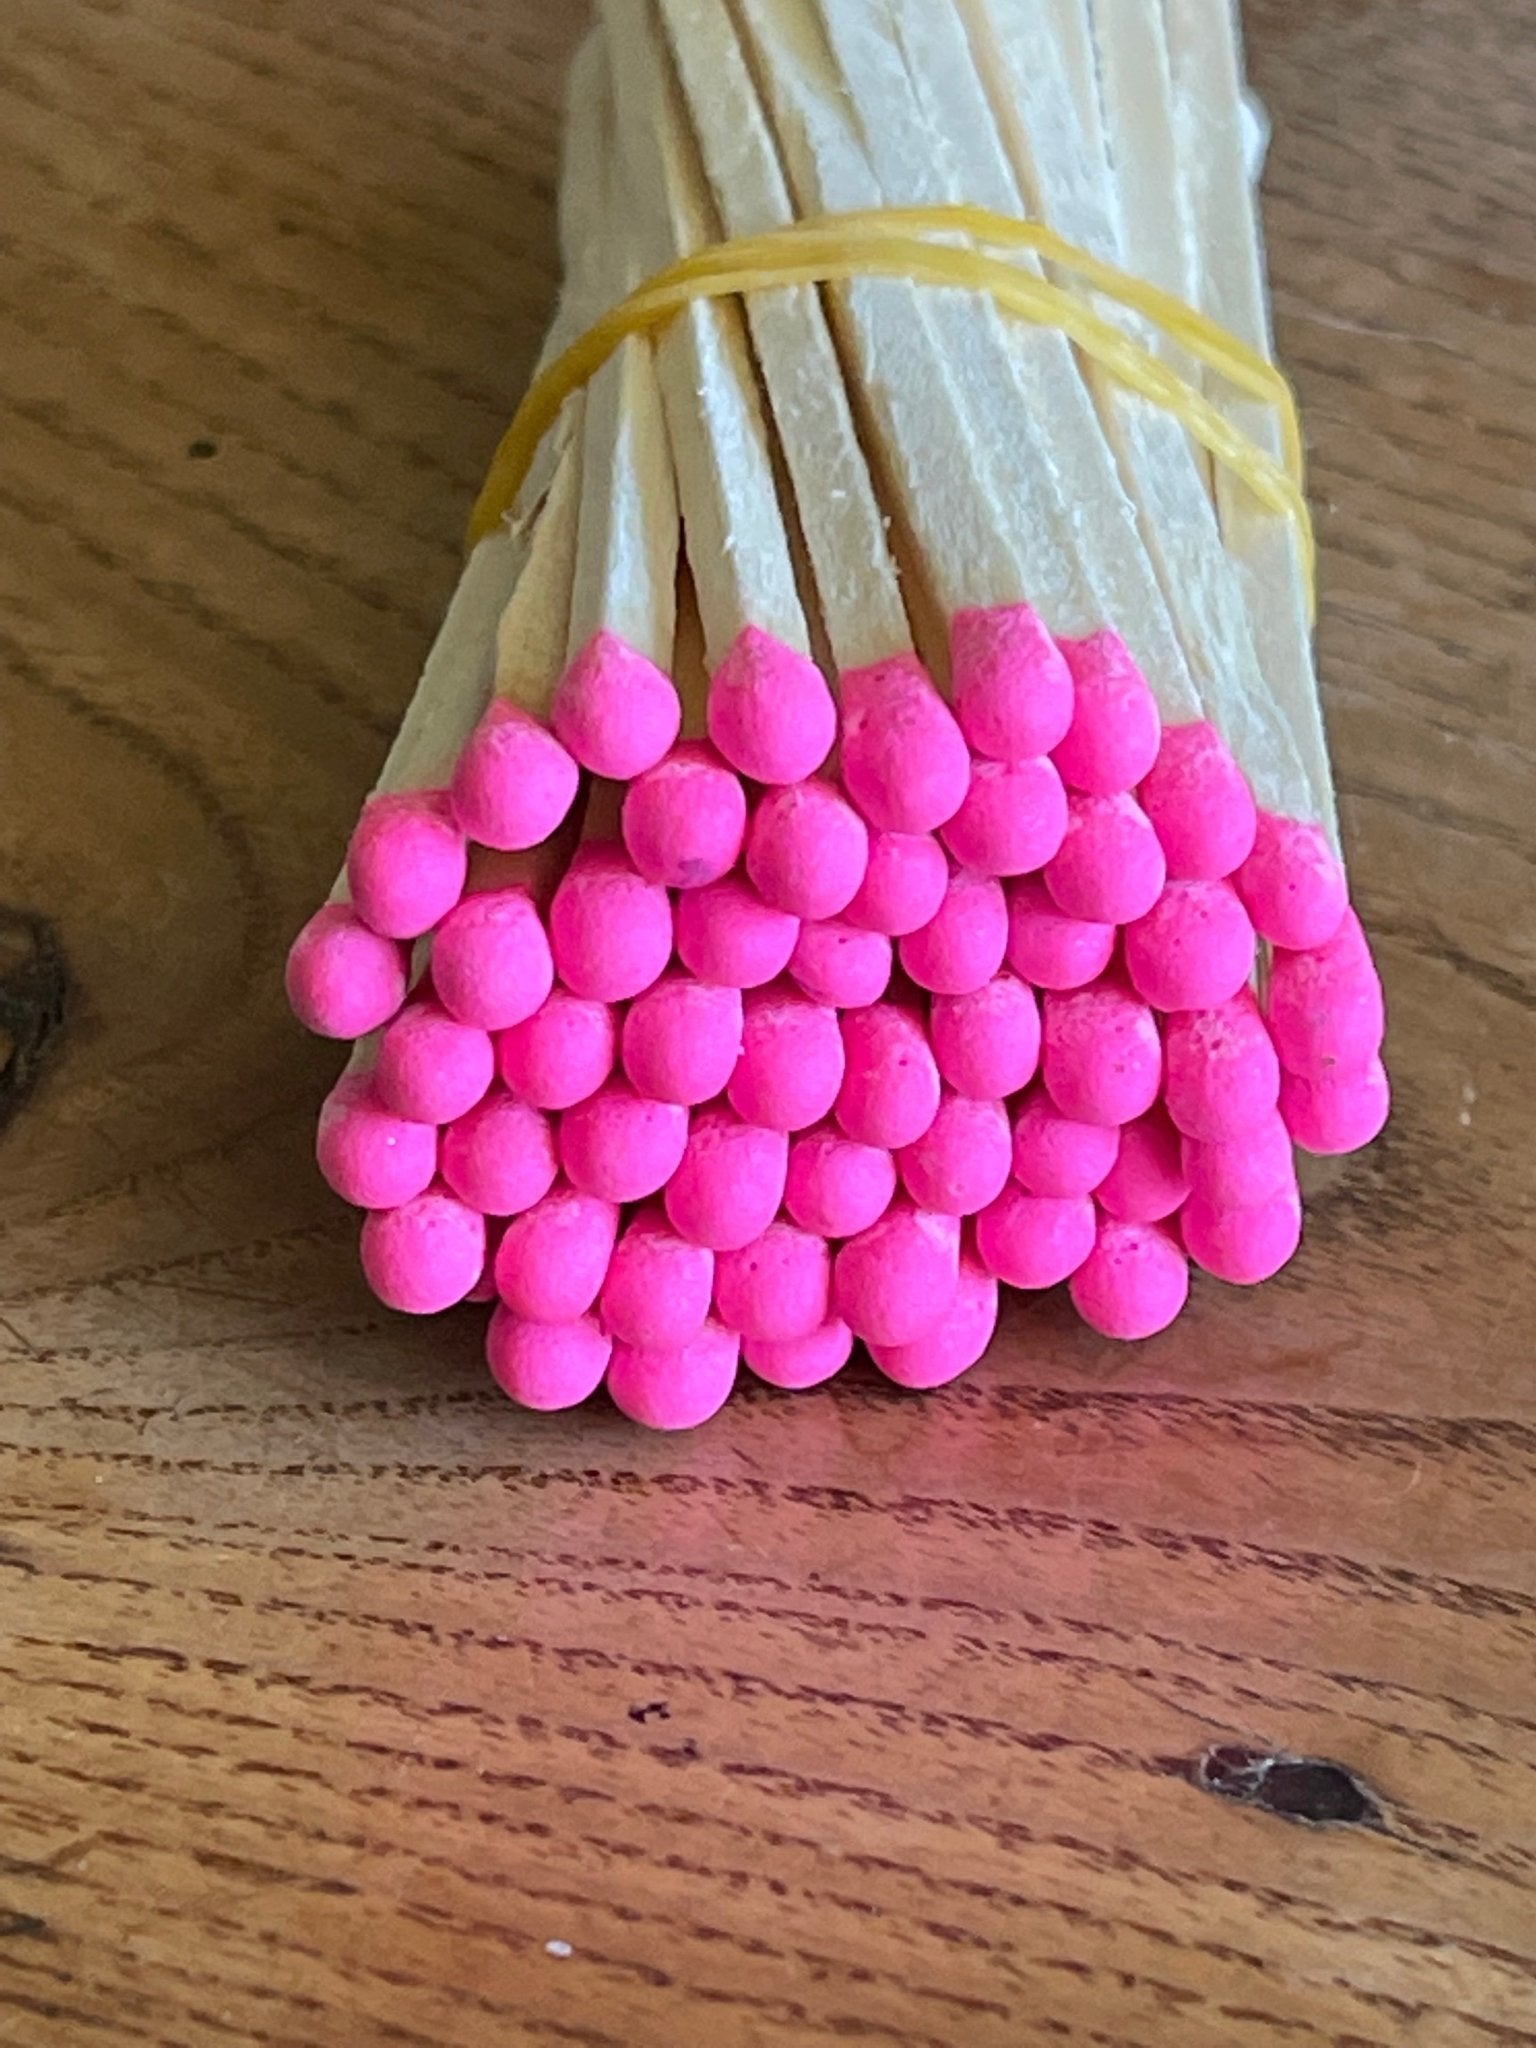 Bulk Wood Matches - 500 Count - 4 Long Wooden (Hot Pink)